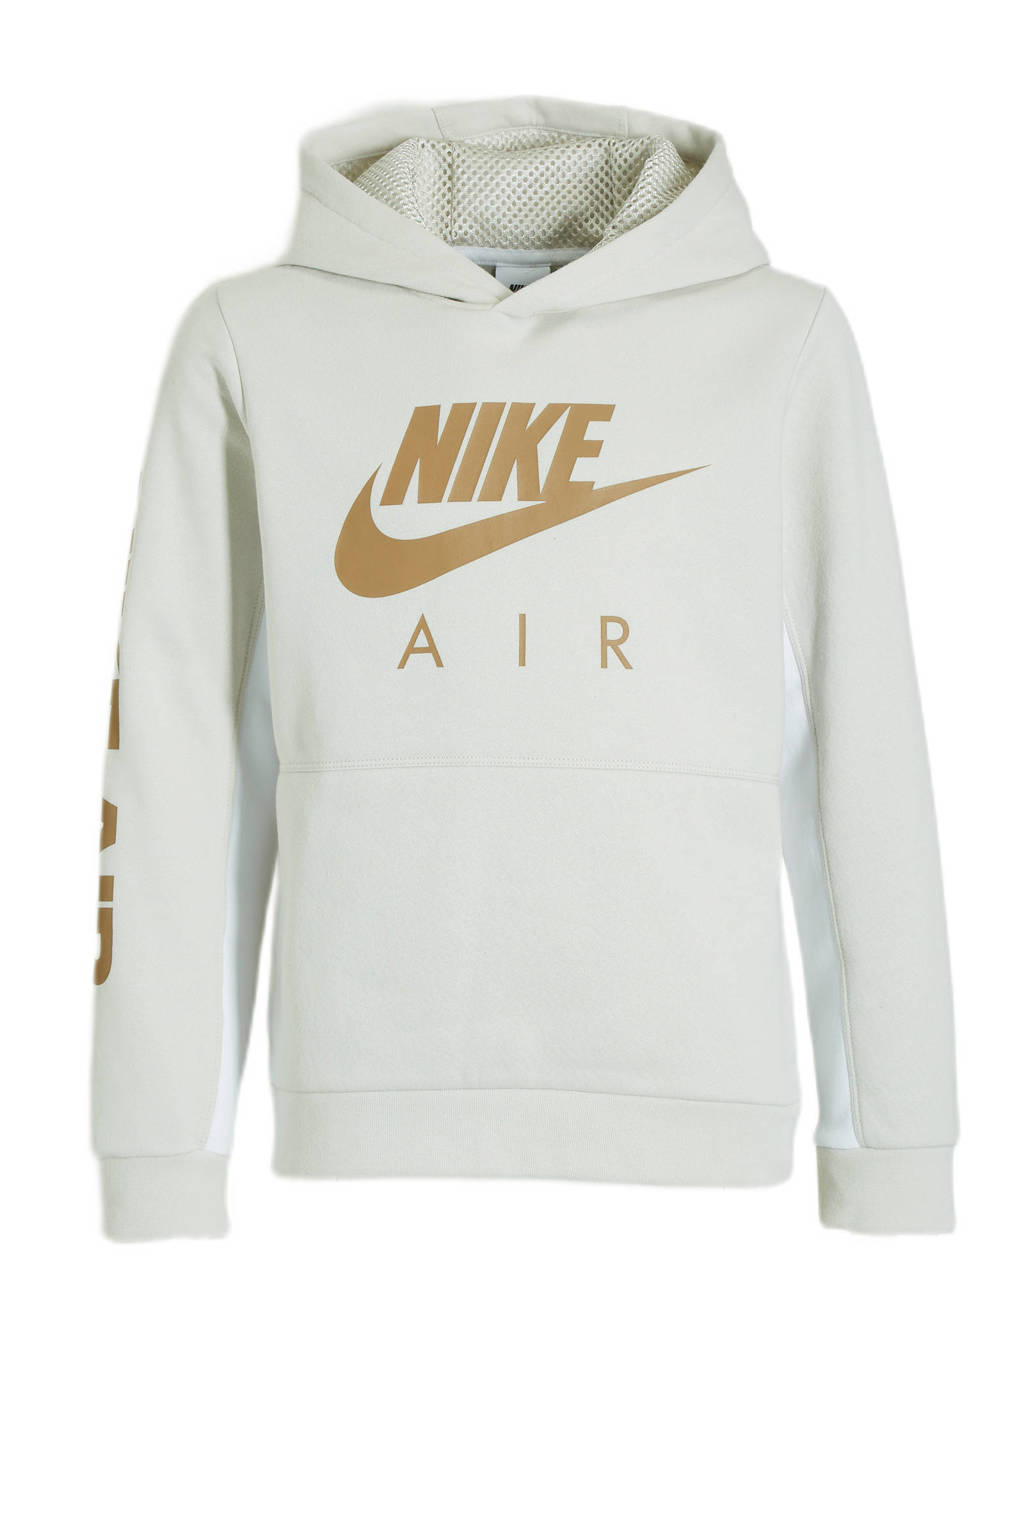 Nike hoodie ecru